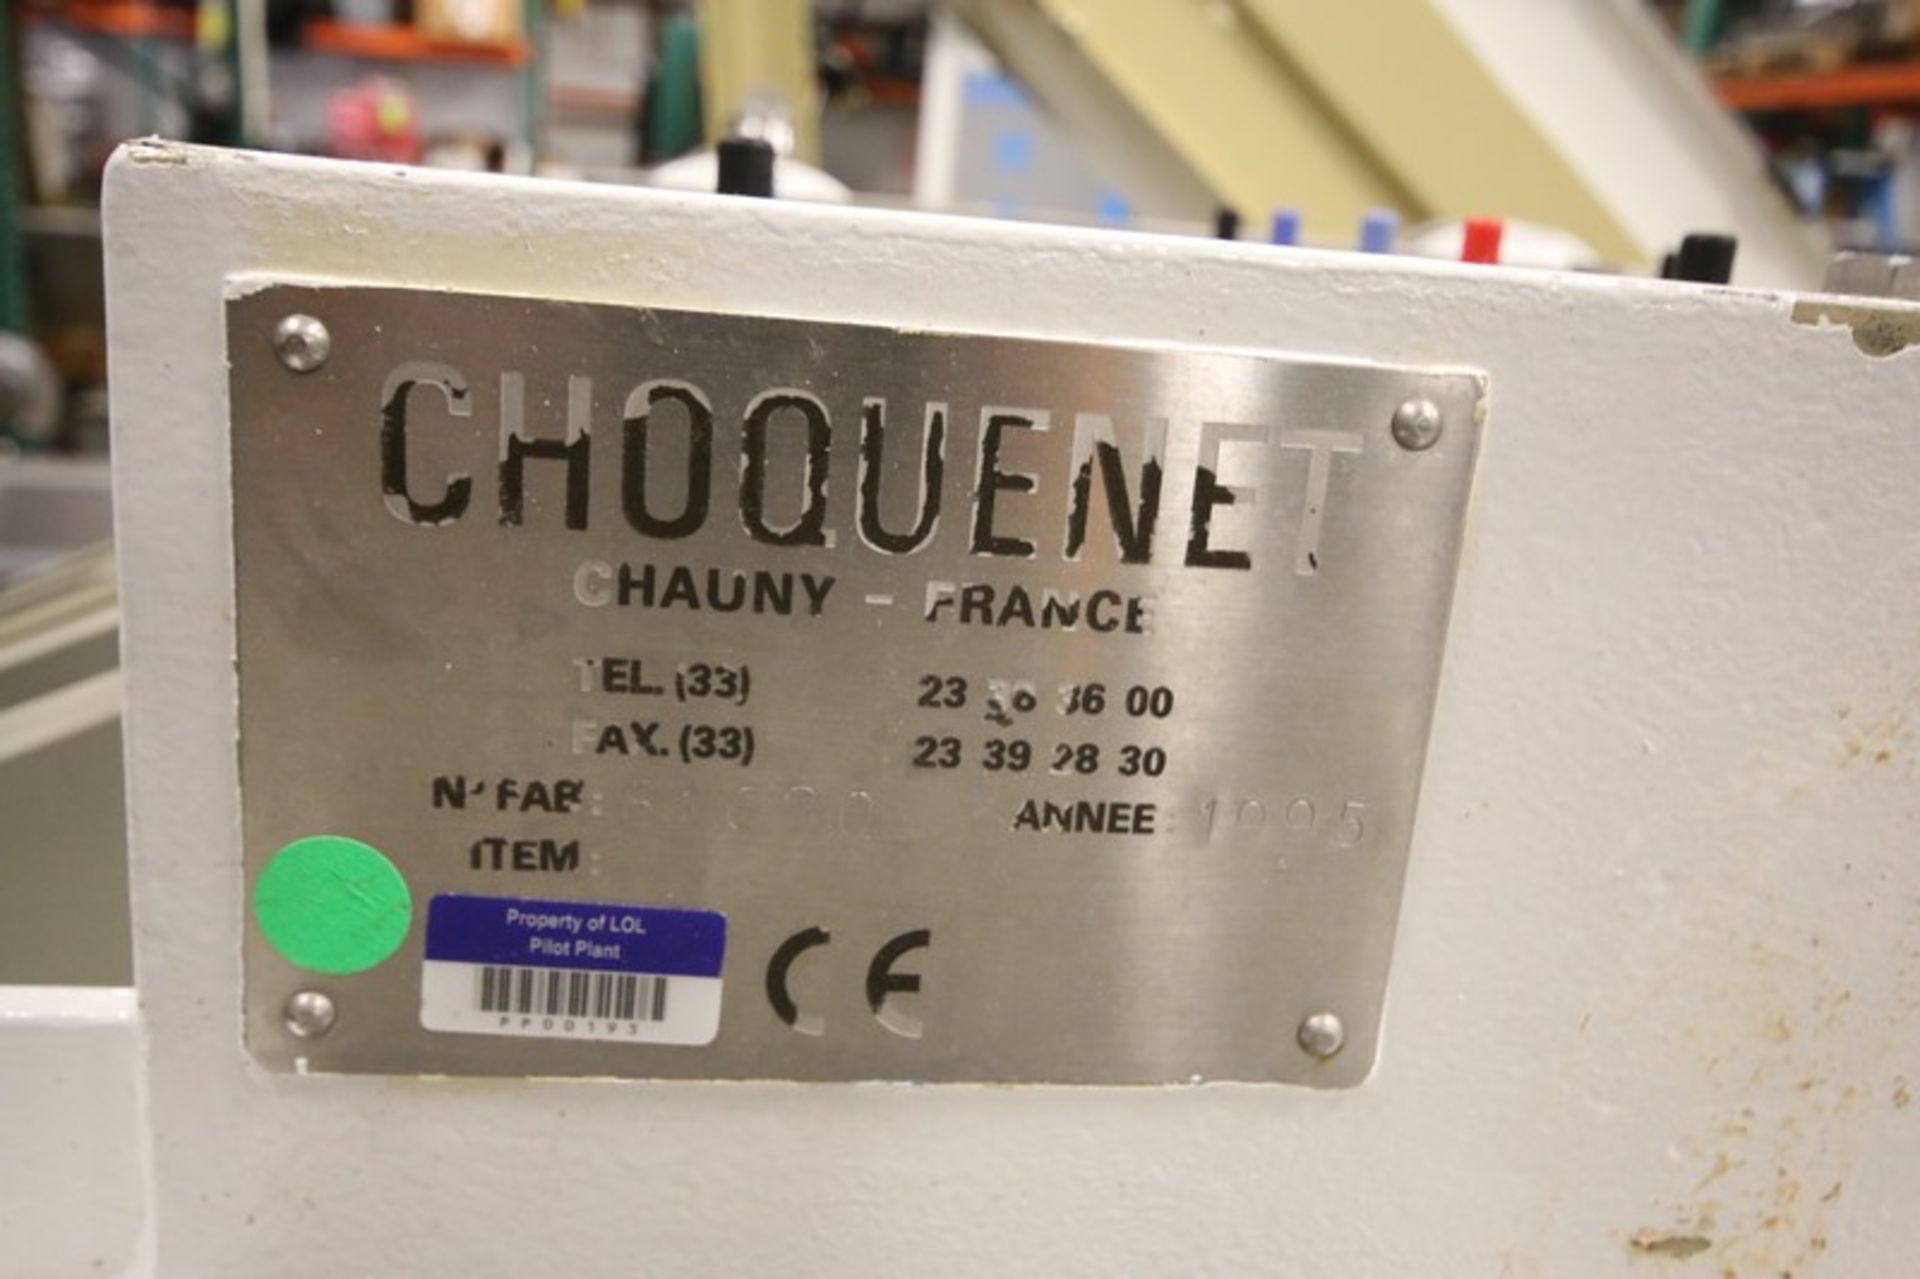 Choquenet 50" H Filter Press, Ref. No. Tirtiaux, Aff: No. WMB1 2000 USA, Ref: No. 81620, with (6) - Bild 6 aus 7